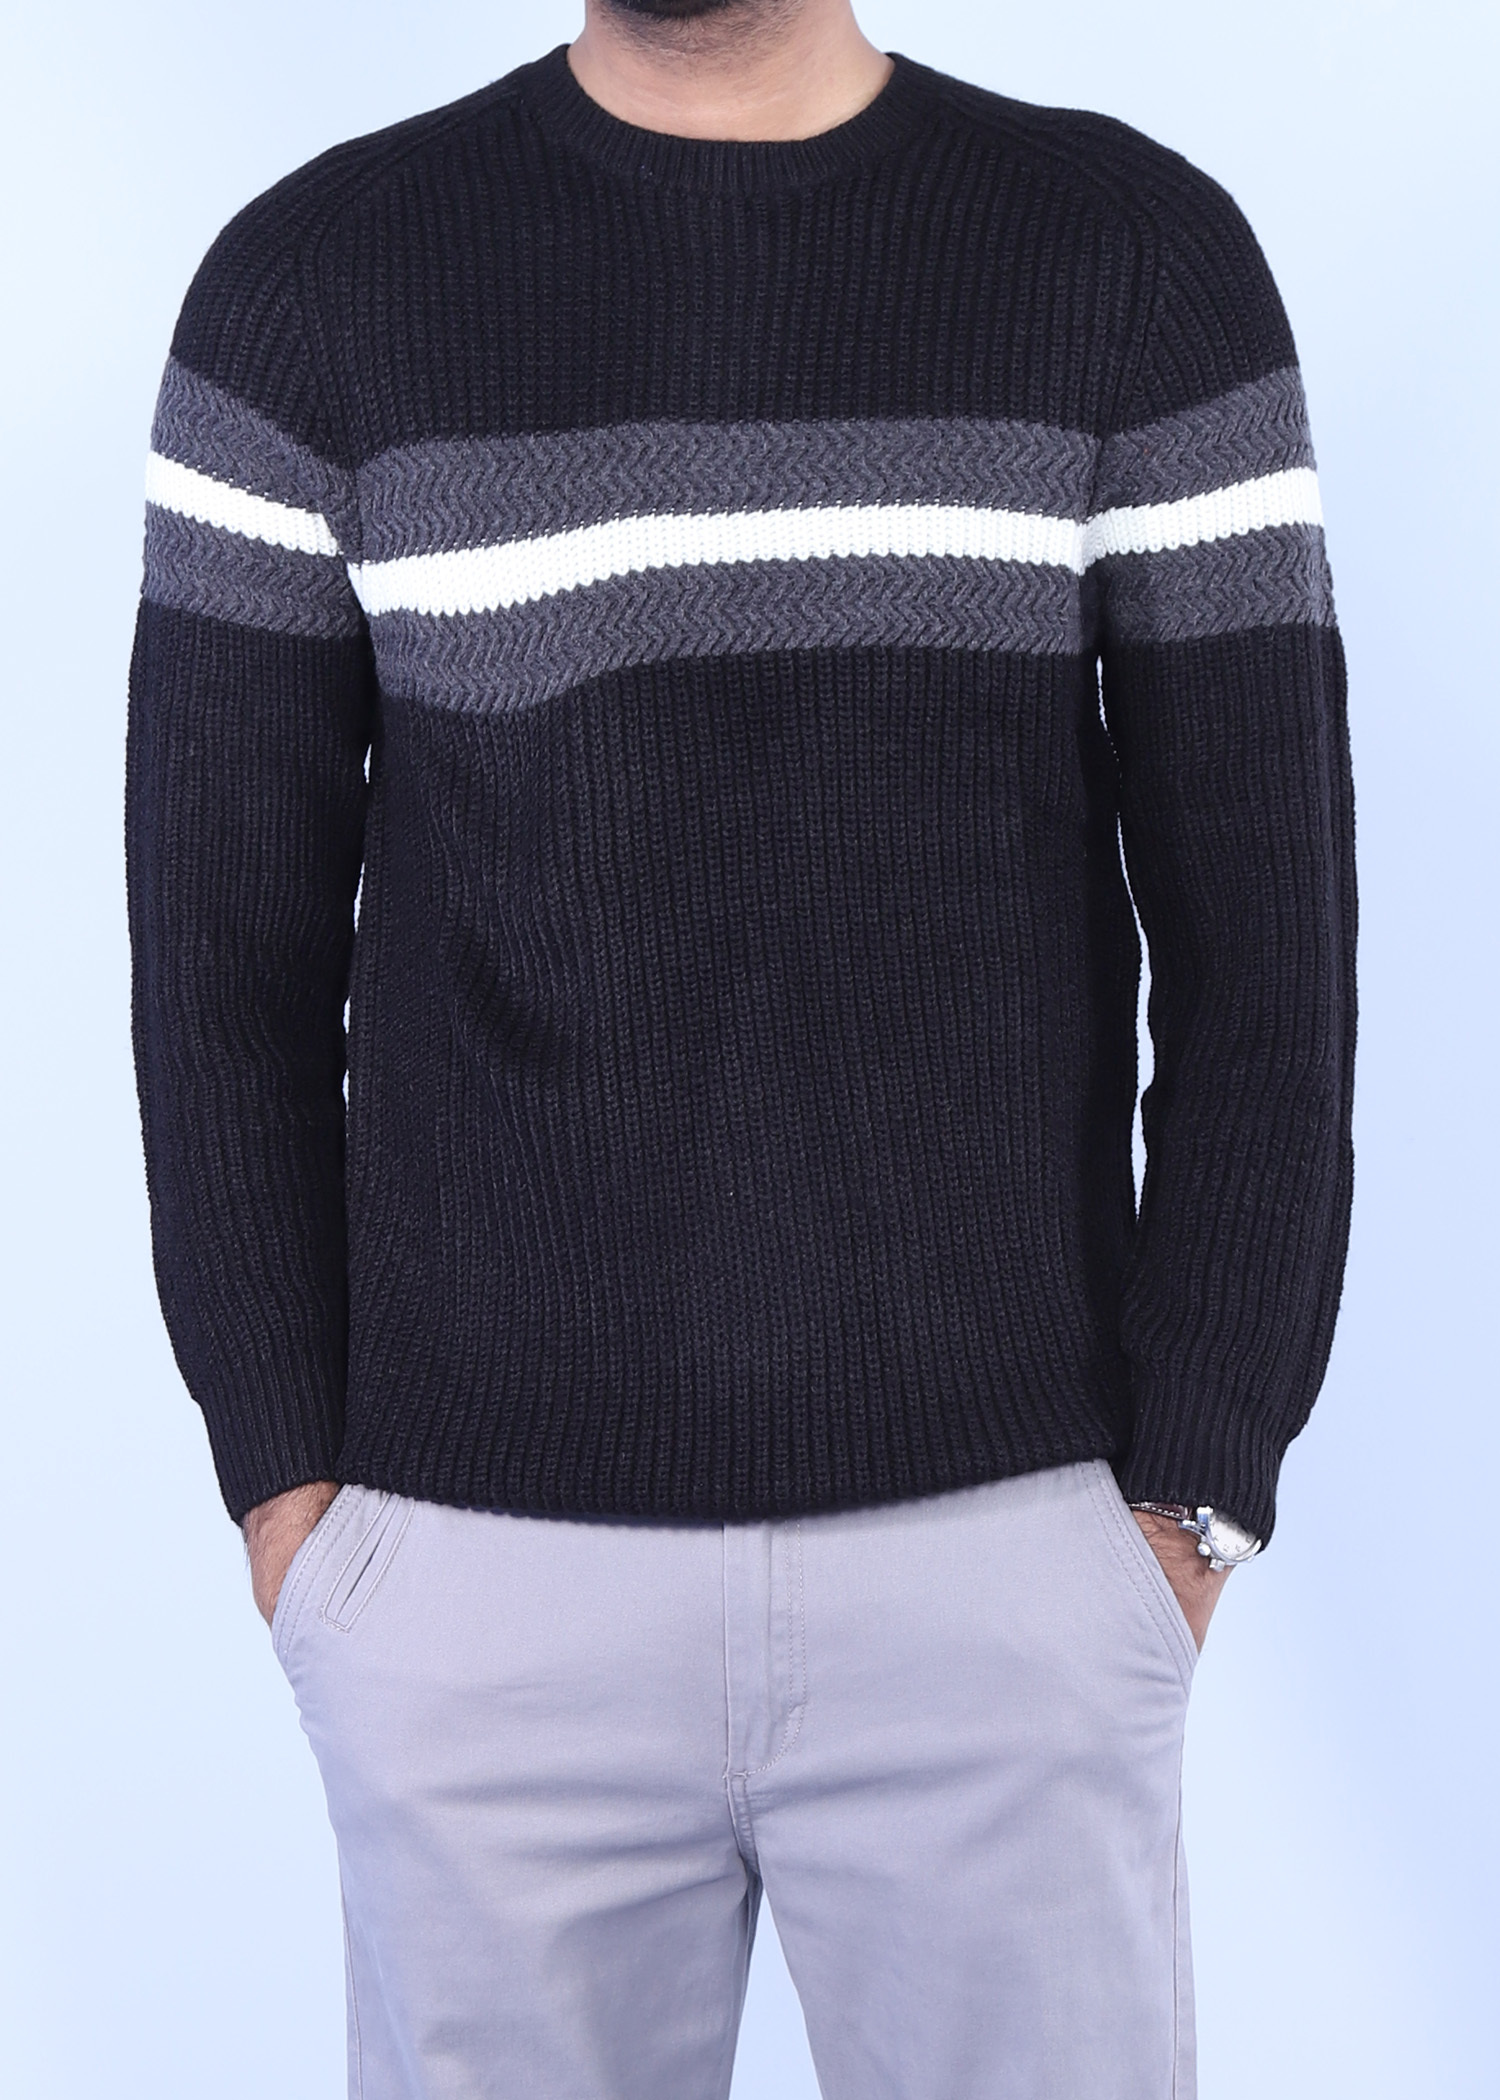 hillstar i sweater black color half front view